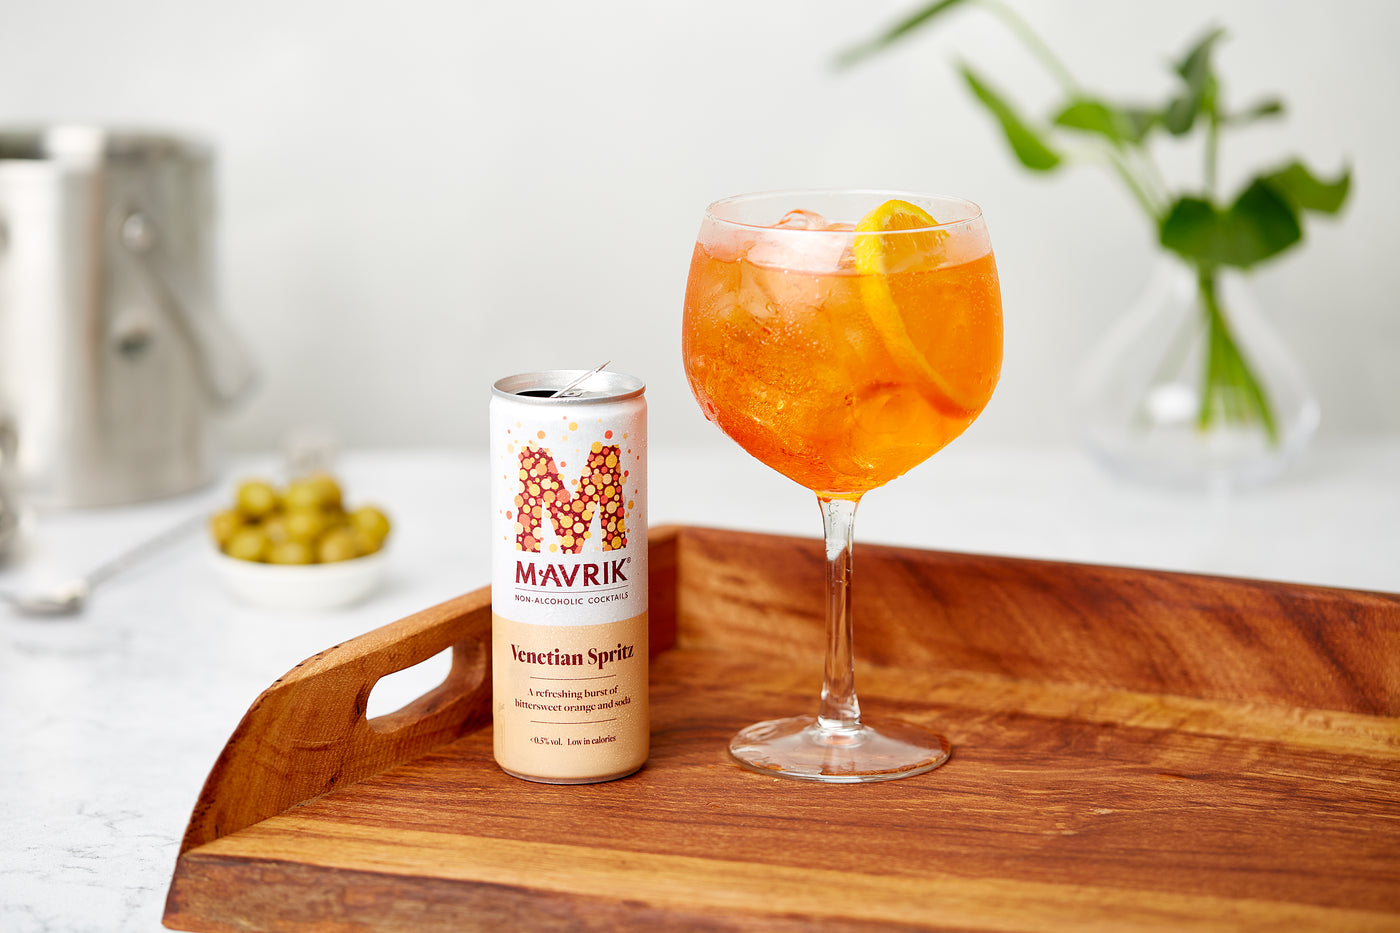 Mavrik drinks Canada - Mavrik drinks USA - delicious veneitan spritz cocktail - best non-alcoholic cocktails